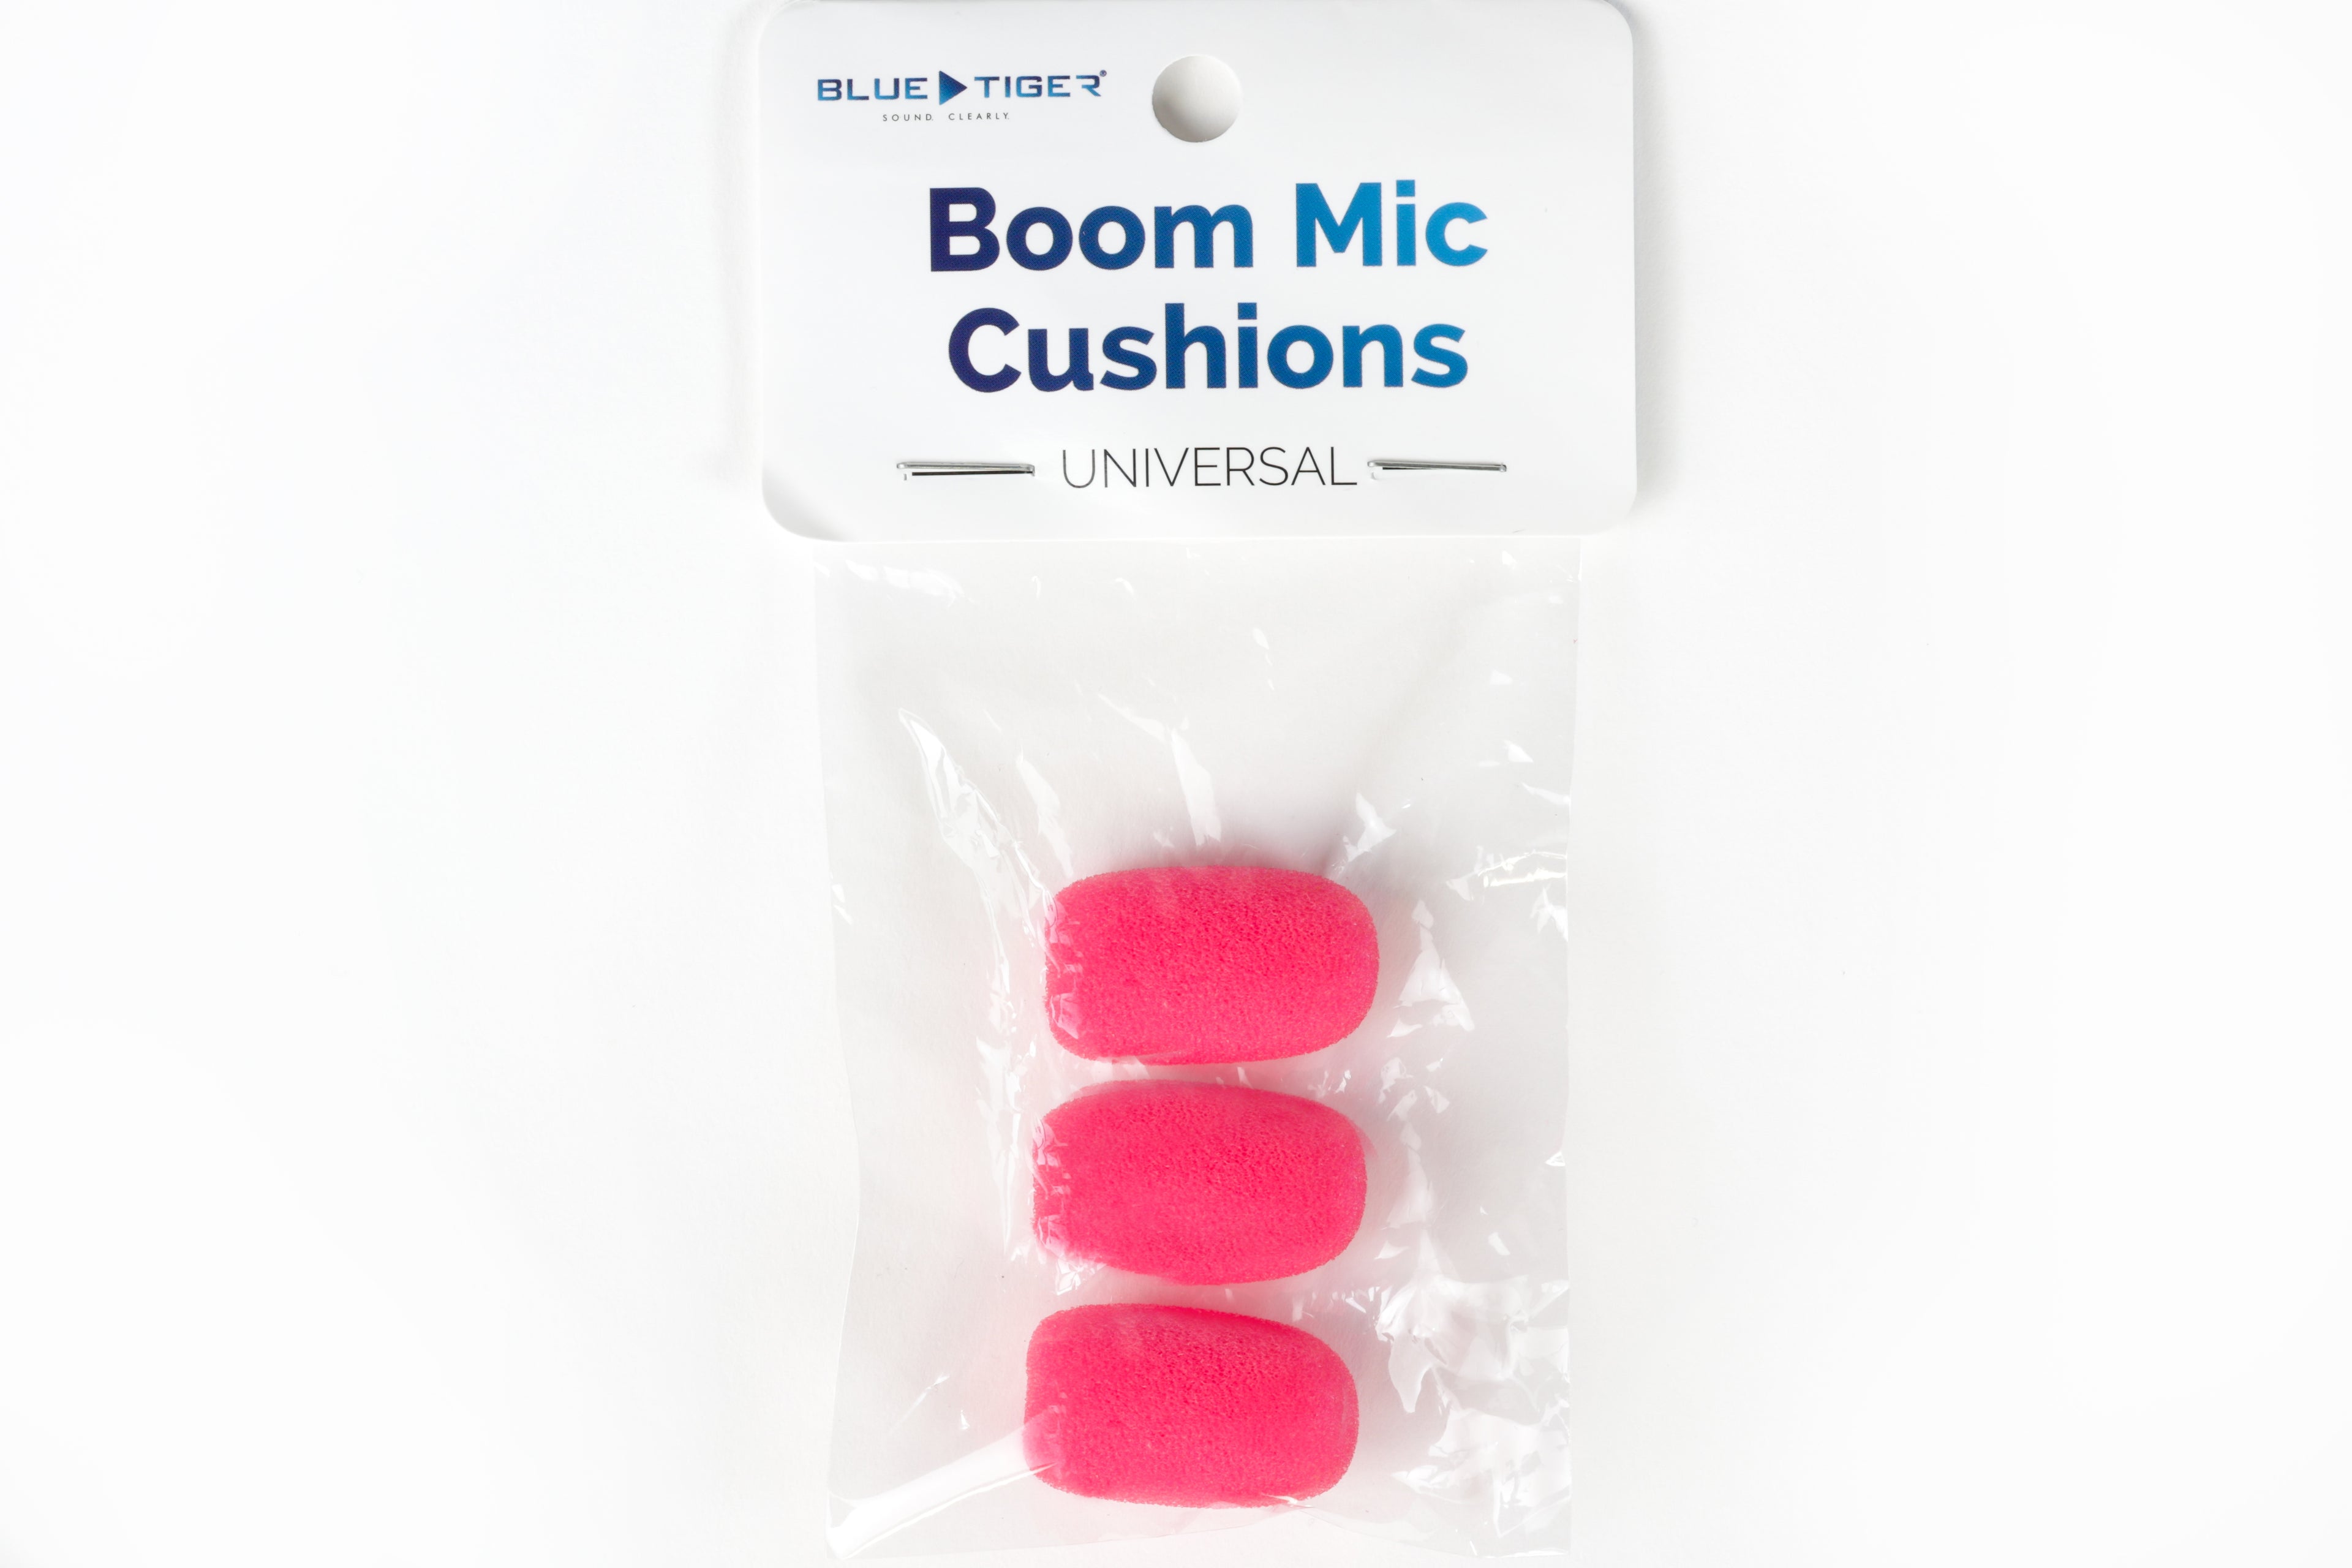 Universal Boom Mic Cushions (3-pack)